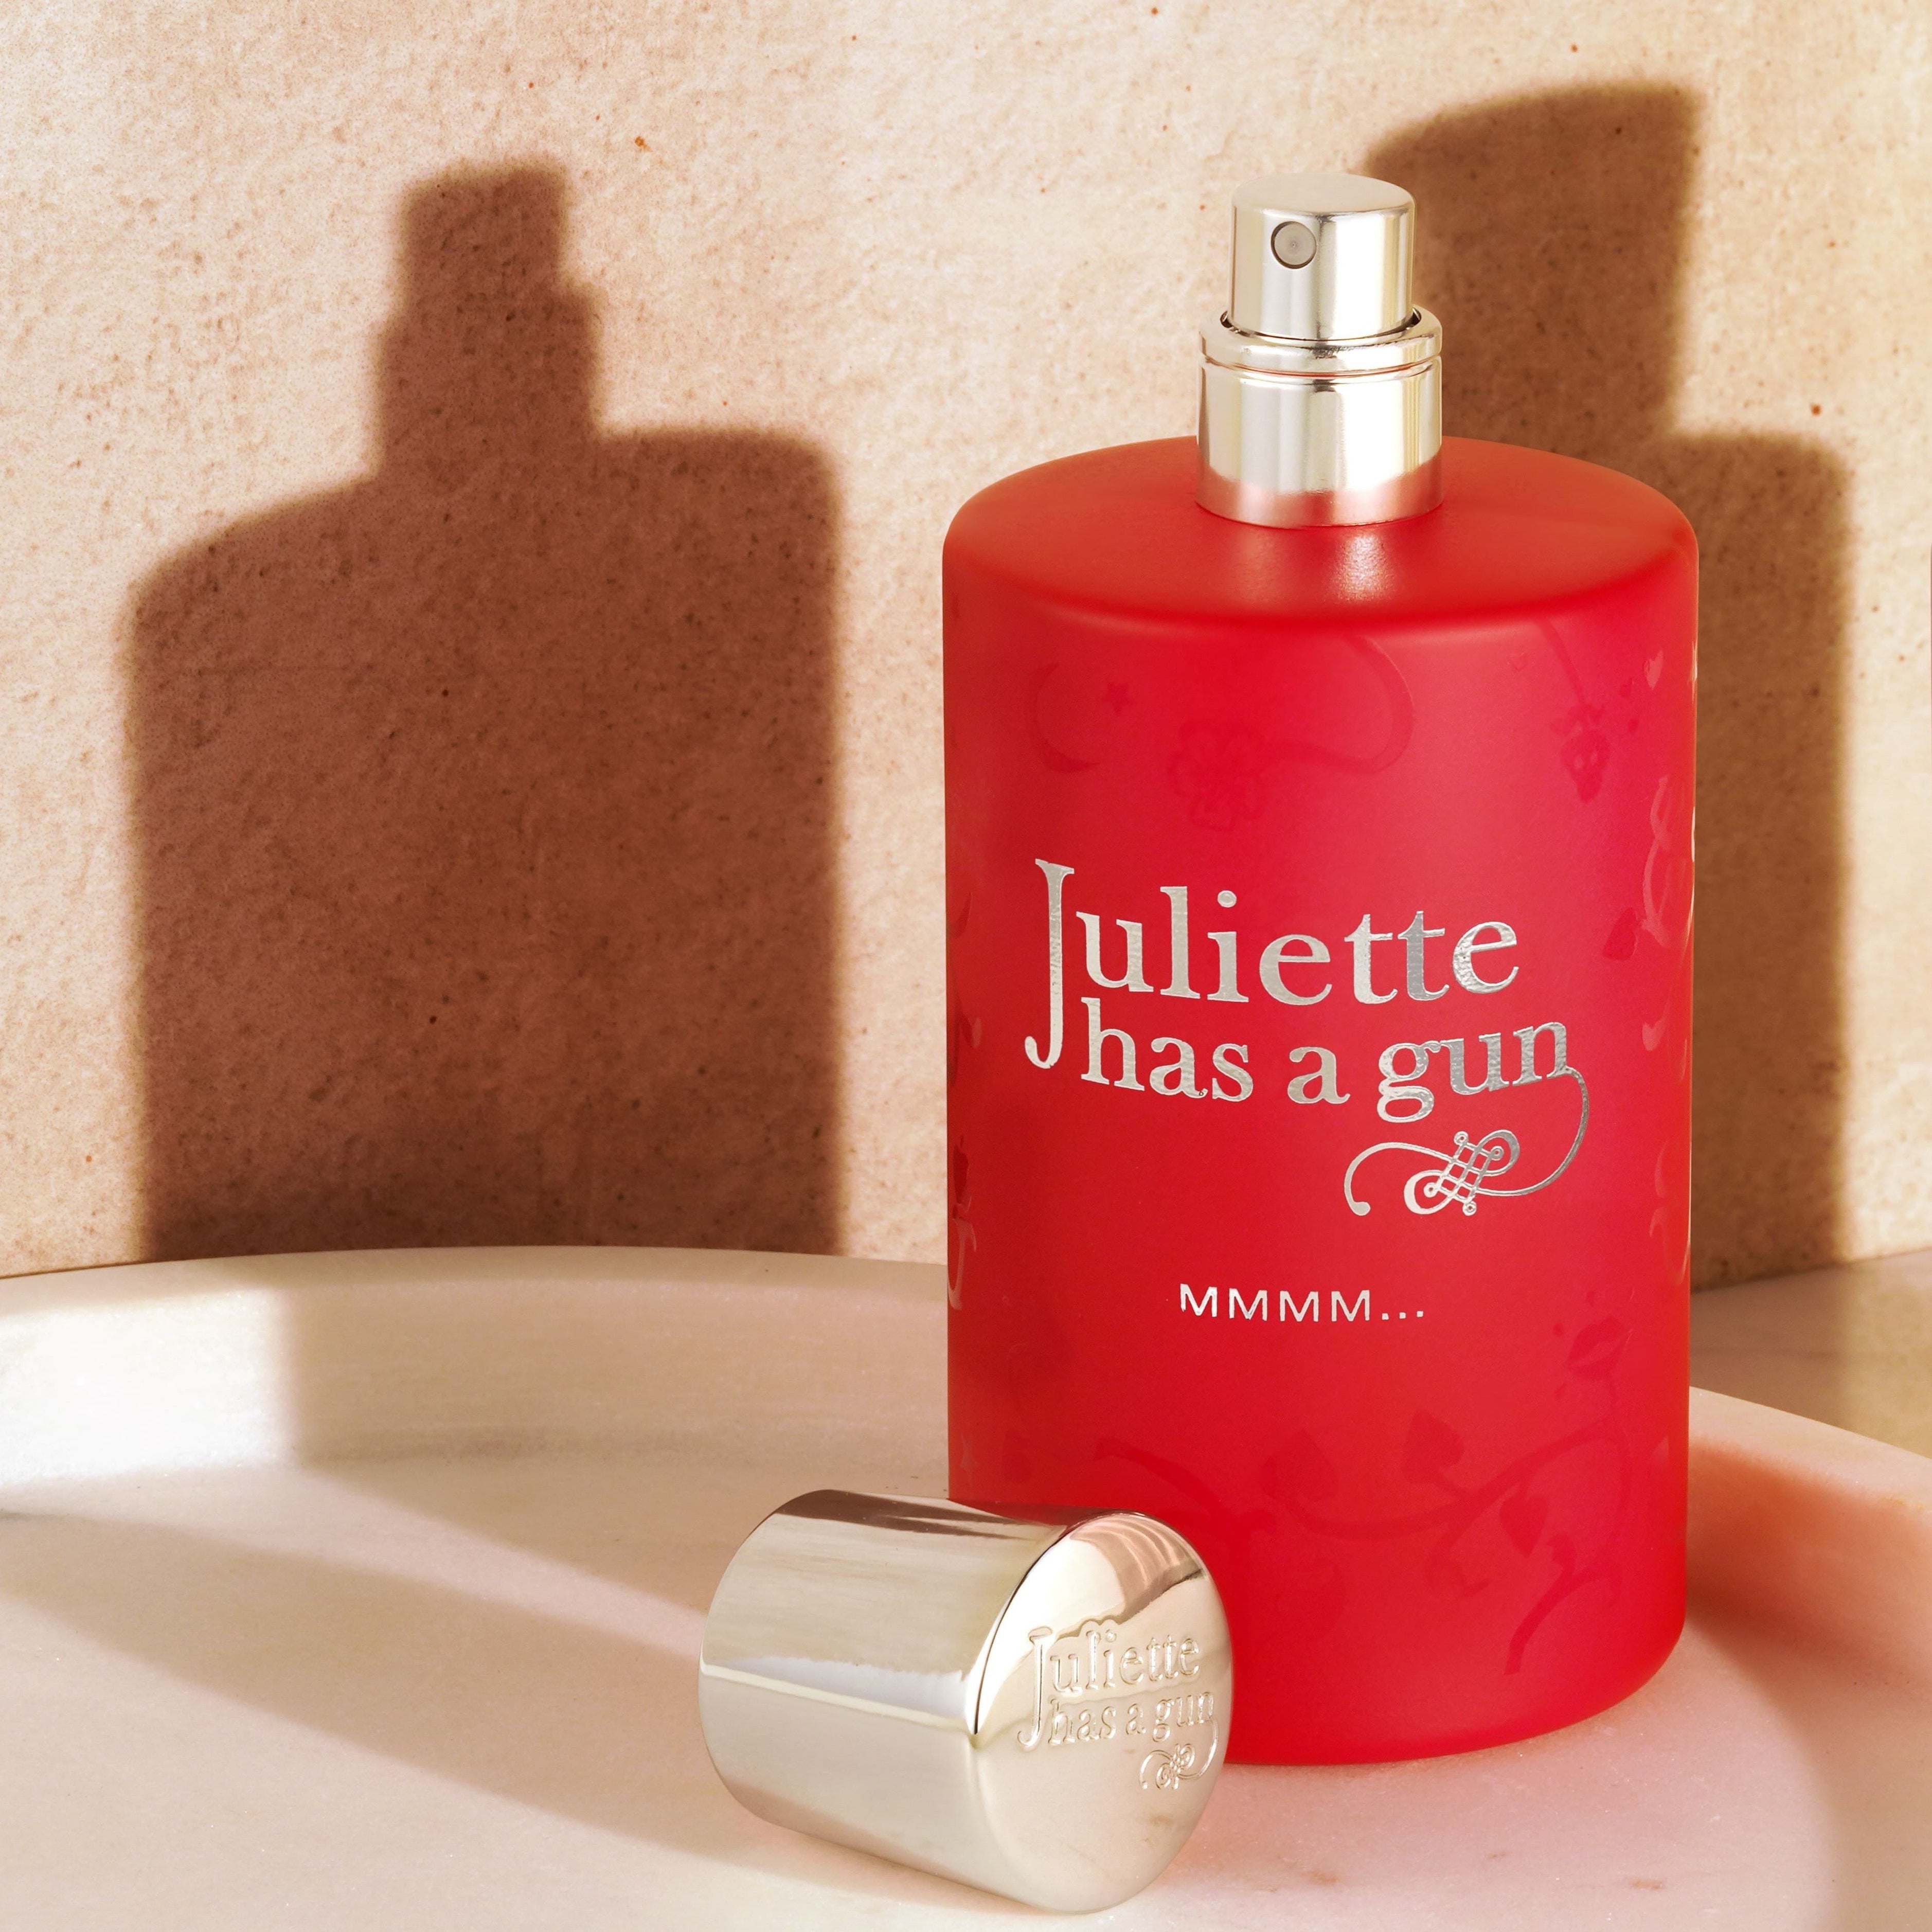 Juliette Has A Gun Mmmm… EDP | My Perfume Shop Australia